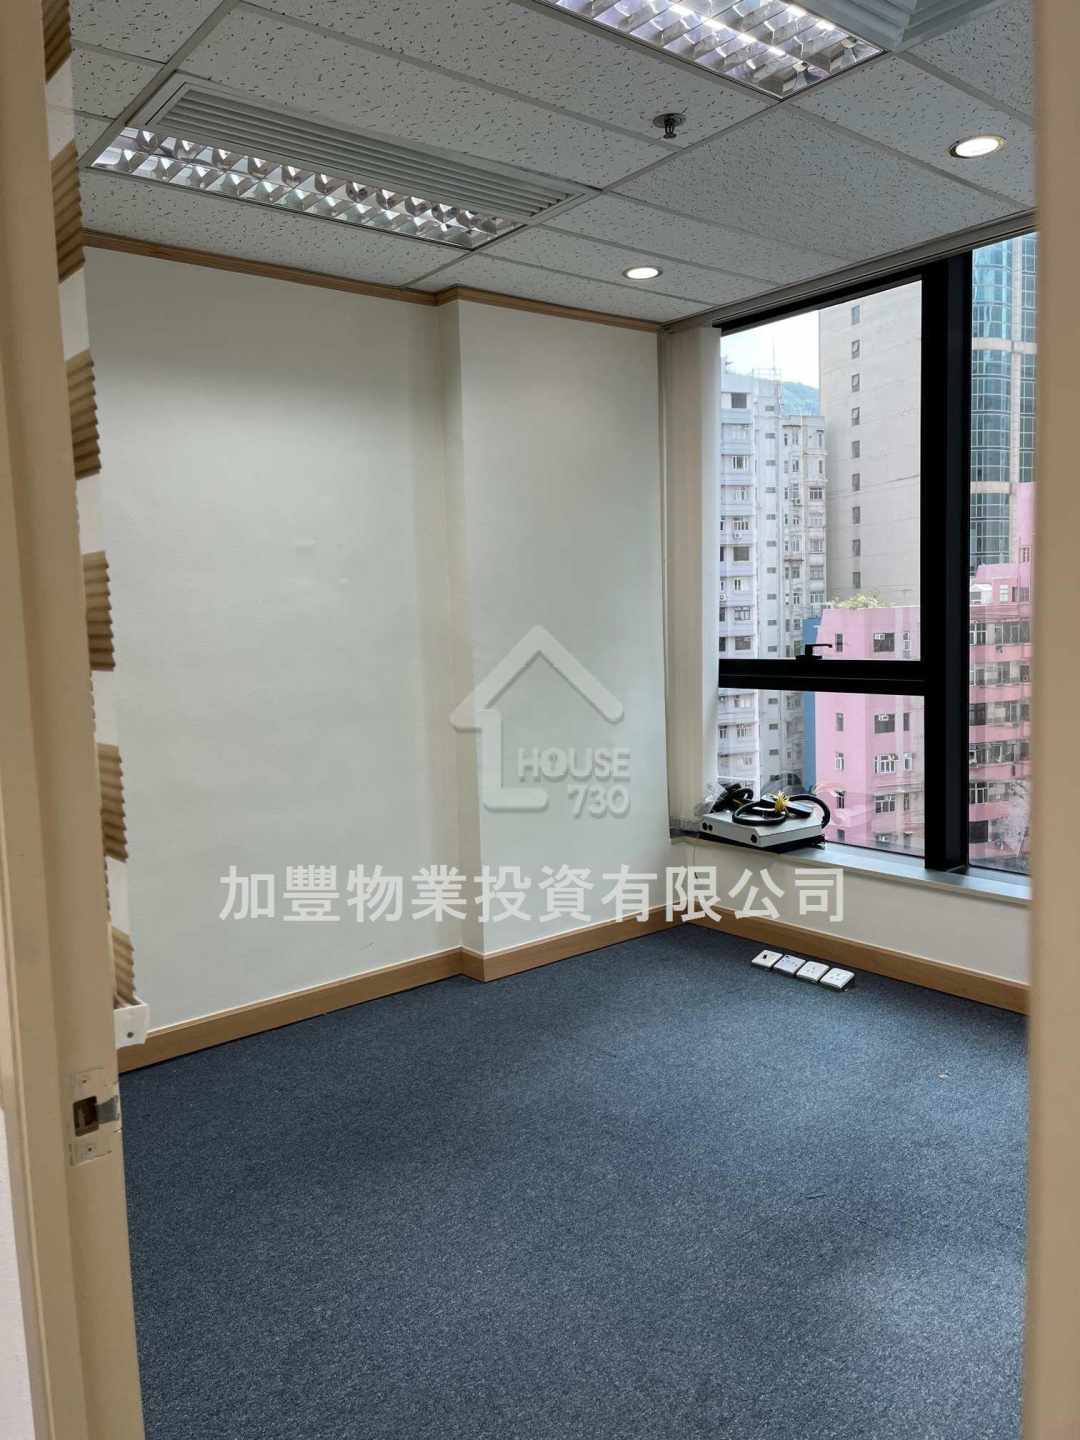 Wan Chai EMPEROR GROUP CENTRE Middle Floor House730-6754551